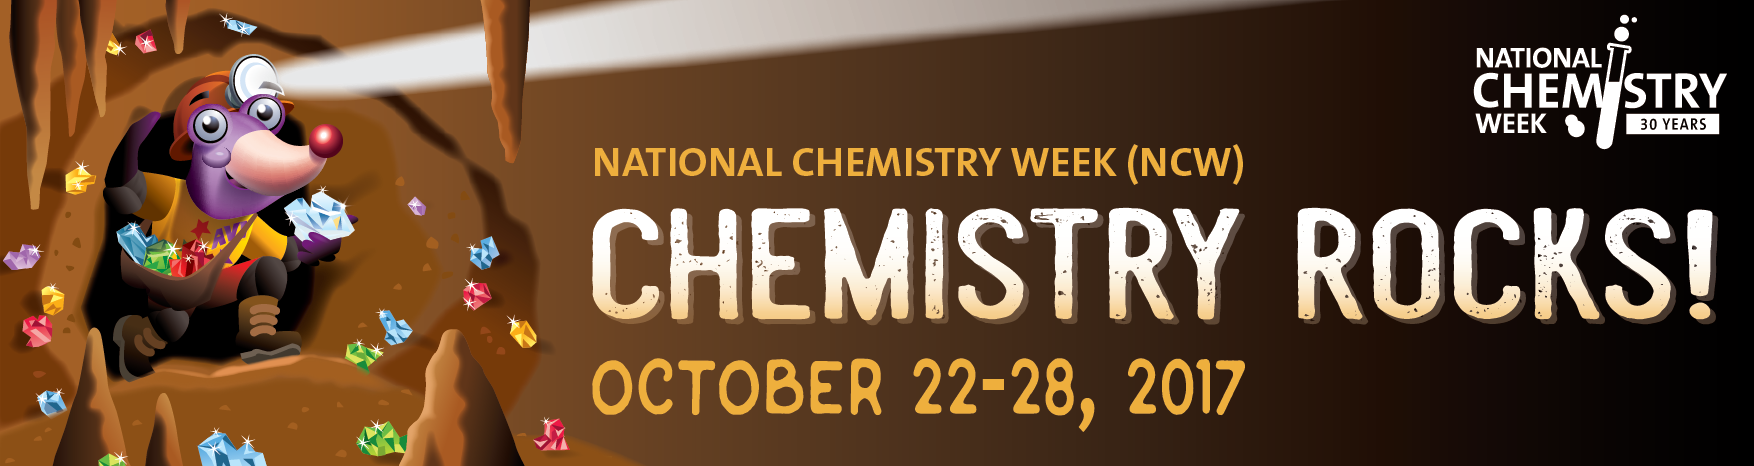 National Chemistry Week 2017 logo banner